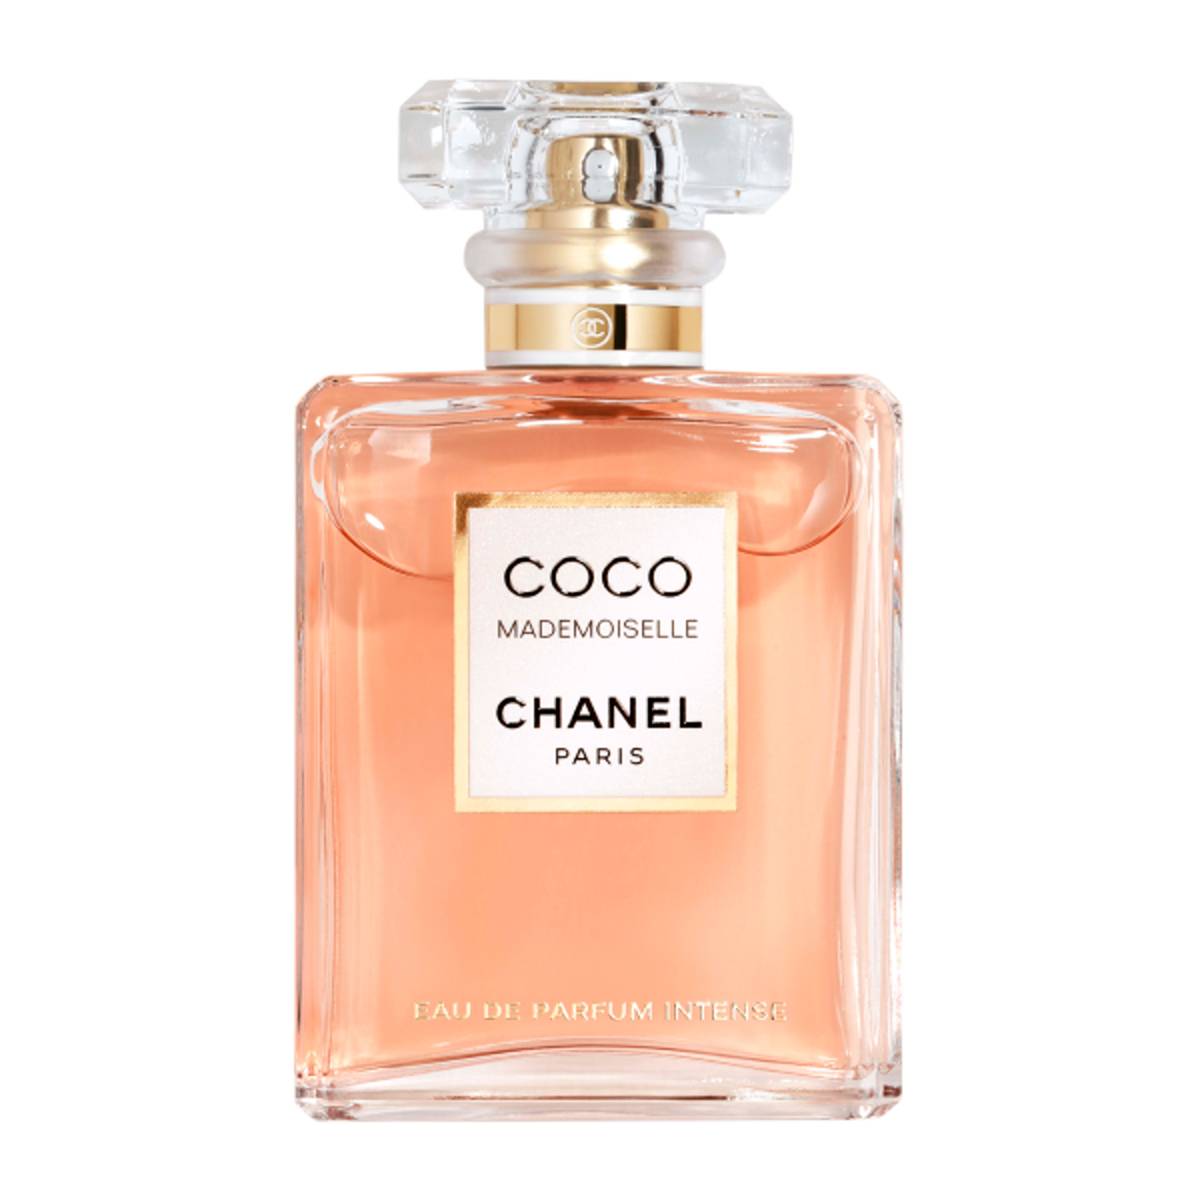  Chanel Coco Mademoiselle je jedan od najpopularnijih mirisa. 